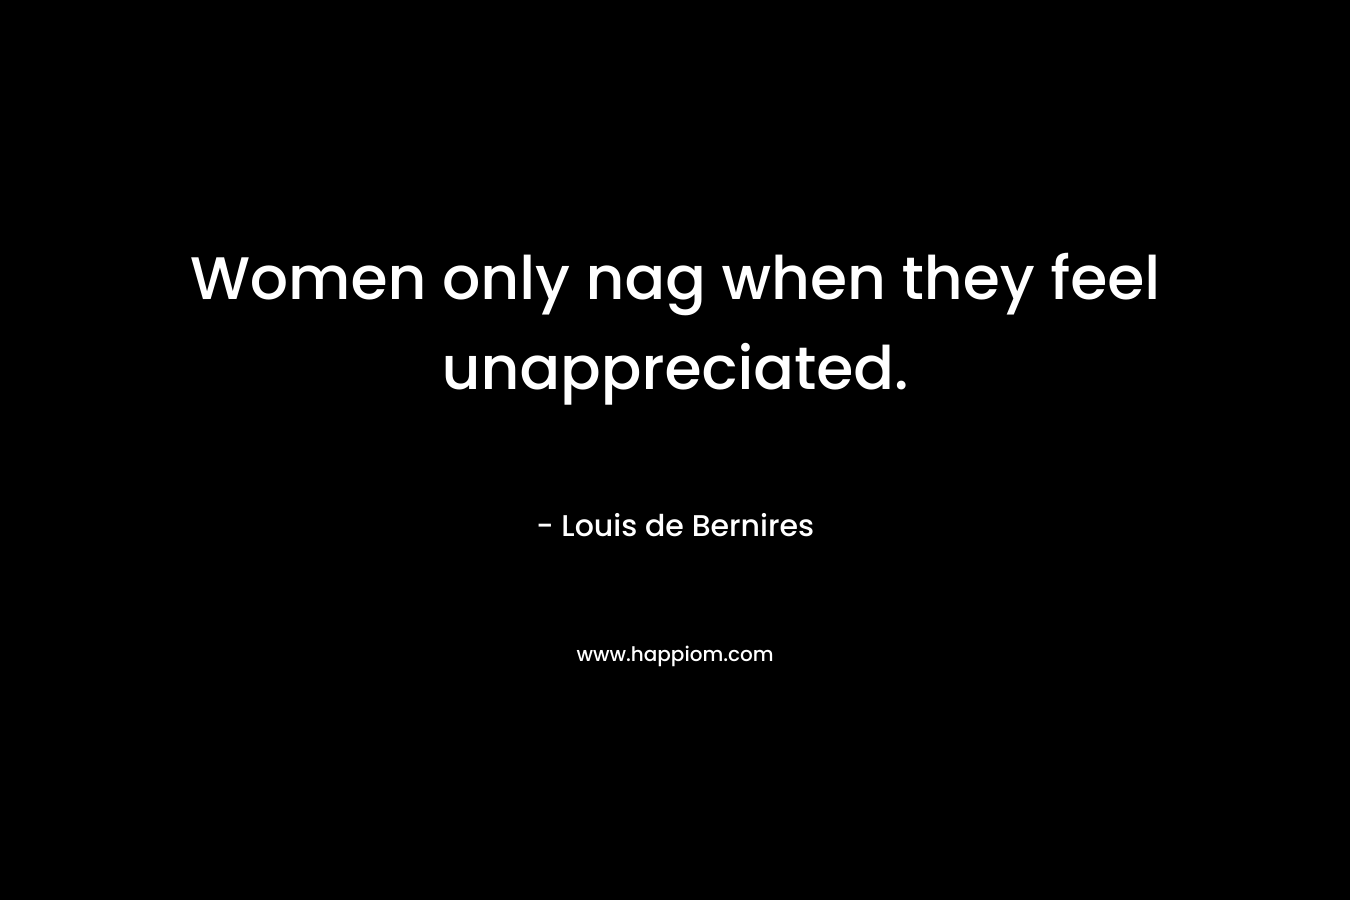 Women only nag when they feel unappreciated. – Louis de Bernires